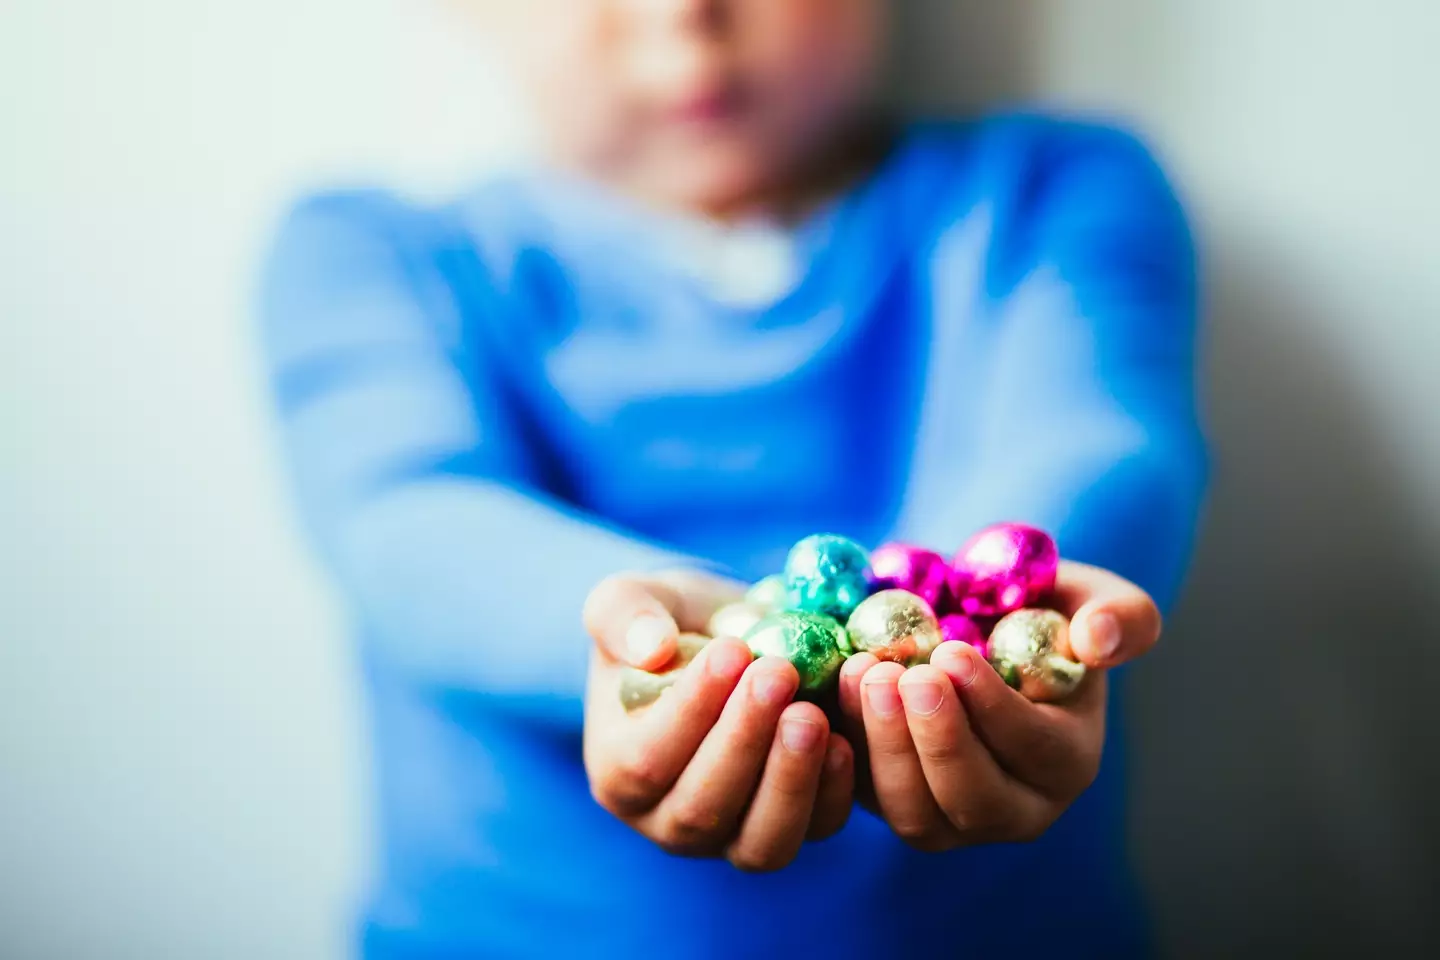 Mini chocolate eggs can prove a choking hazard for kids.